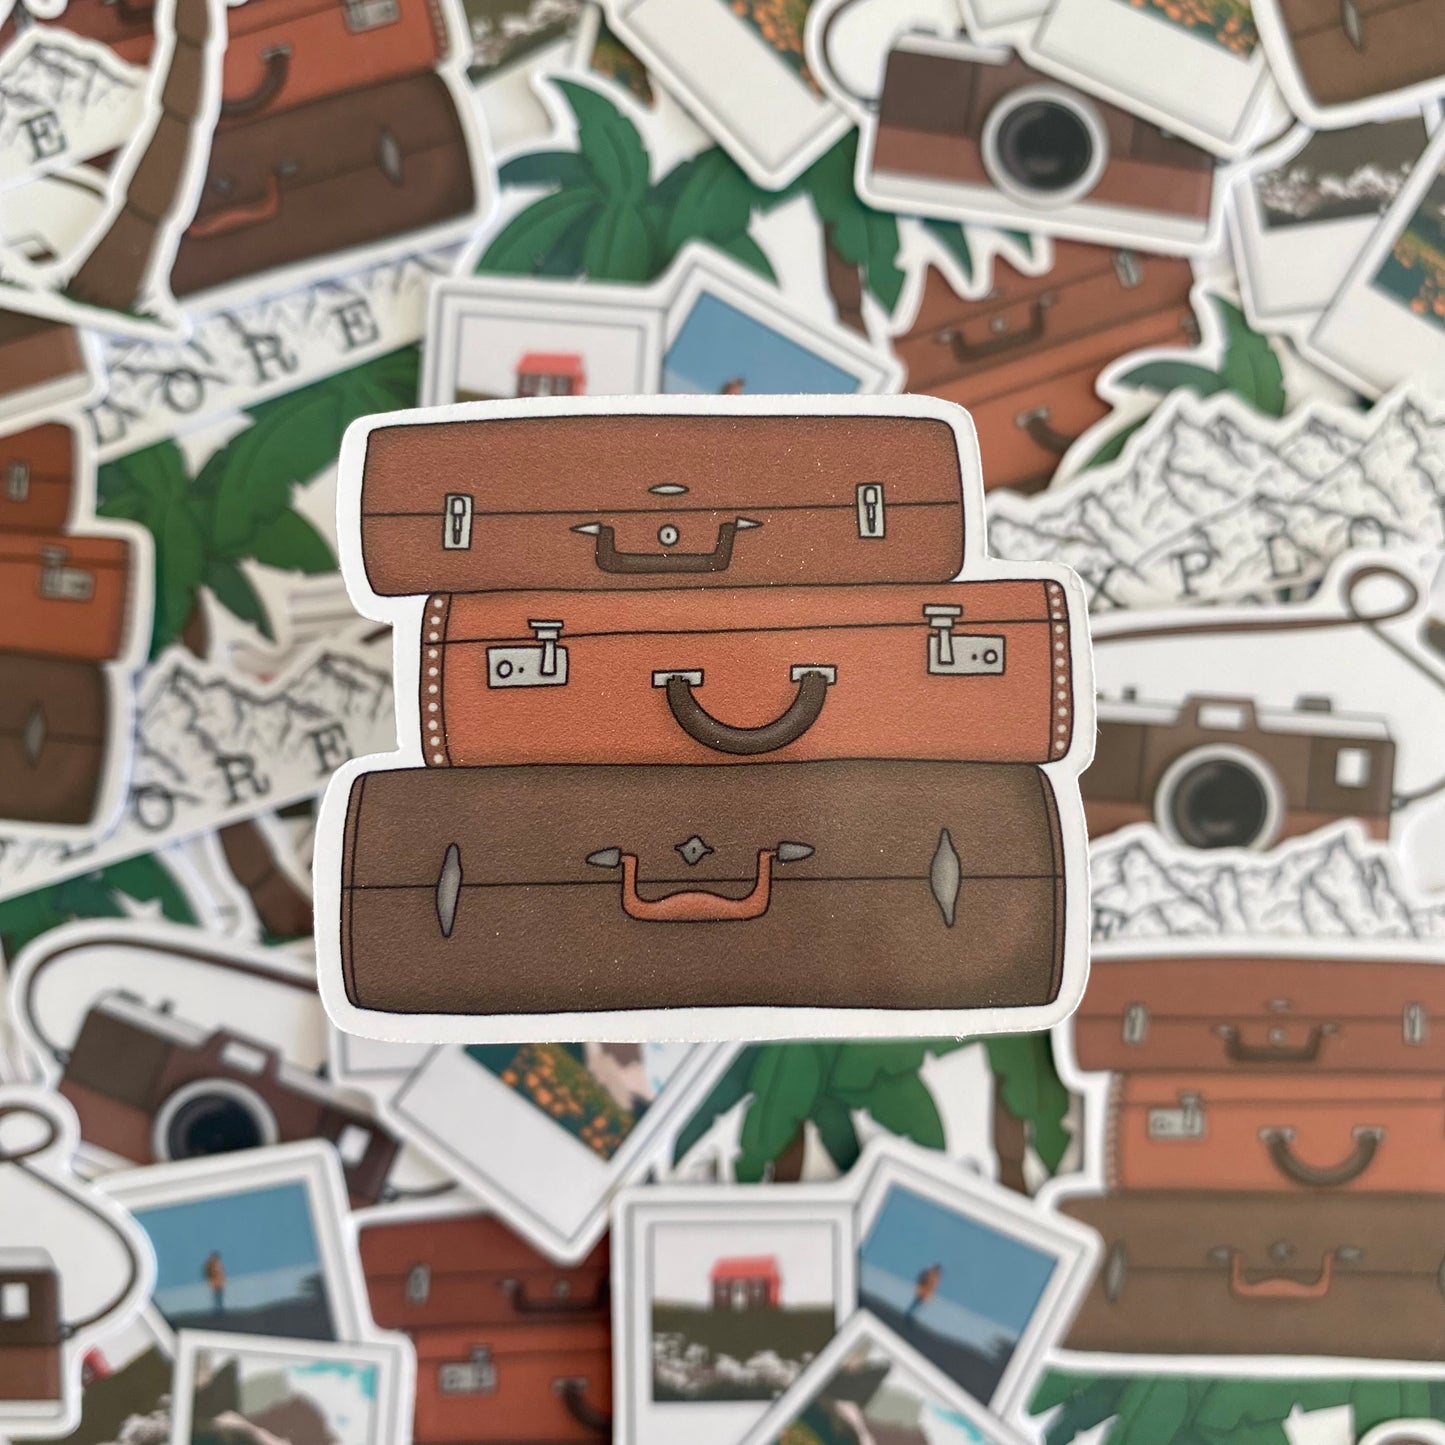 Explore | Sticker set of 5